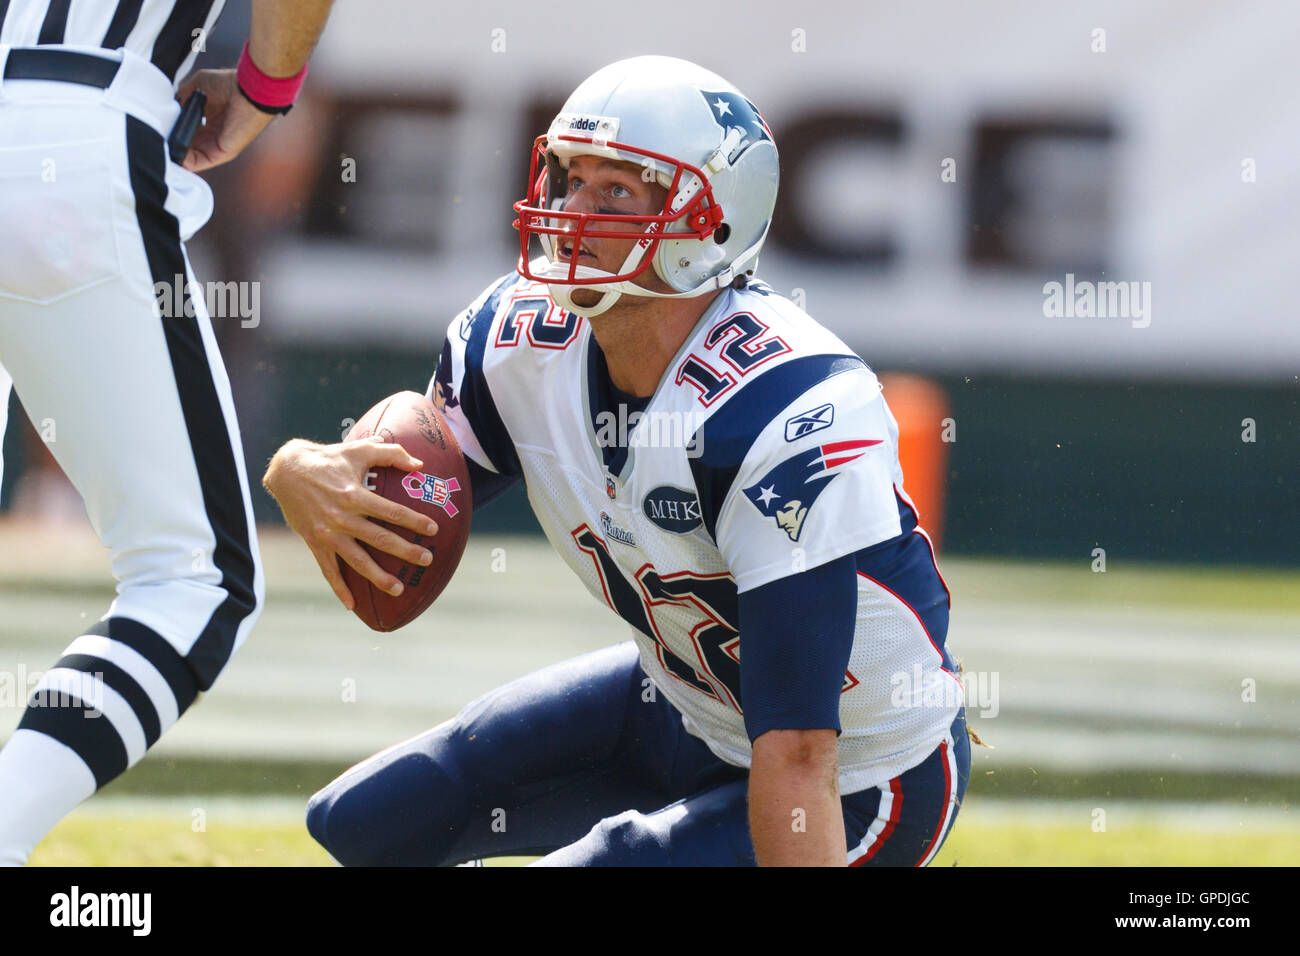 Okt 2, 2011; Oakland, Ca, USA; New England Patriots Quarterback Tom Brady (12) ist mit der Masse gegen die Oakland Raiders im ersten Quartal bei o klopfte. co Kolosseum. New England besiegt Oakland 31-19. Stockfoto